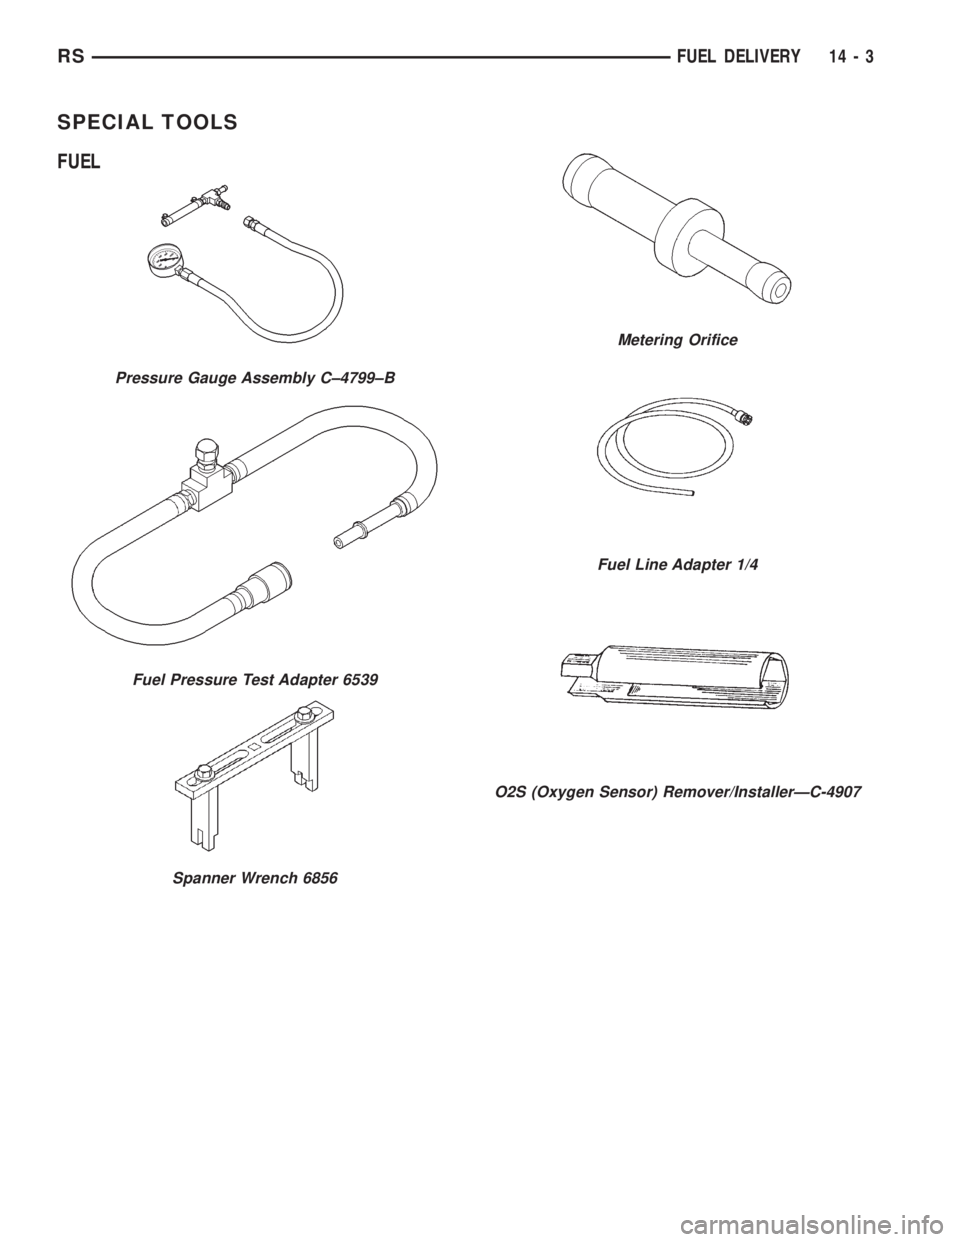 CHRYSLER VOYAGER 2001  Service Manual SPECIAL TOOLS
FUEL
Pressure Gauge Assembly C±4799±B
Fuel Pressure Test Adapter 6539
Spanner Wrench 6856
Metering Orifice
Fuel Line Adapter 1/4
O2S (Oxygen Sensor) Remover/InstallerÐC-4907
RSFUEL DE